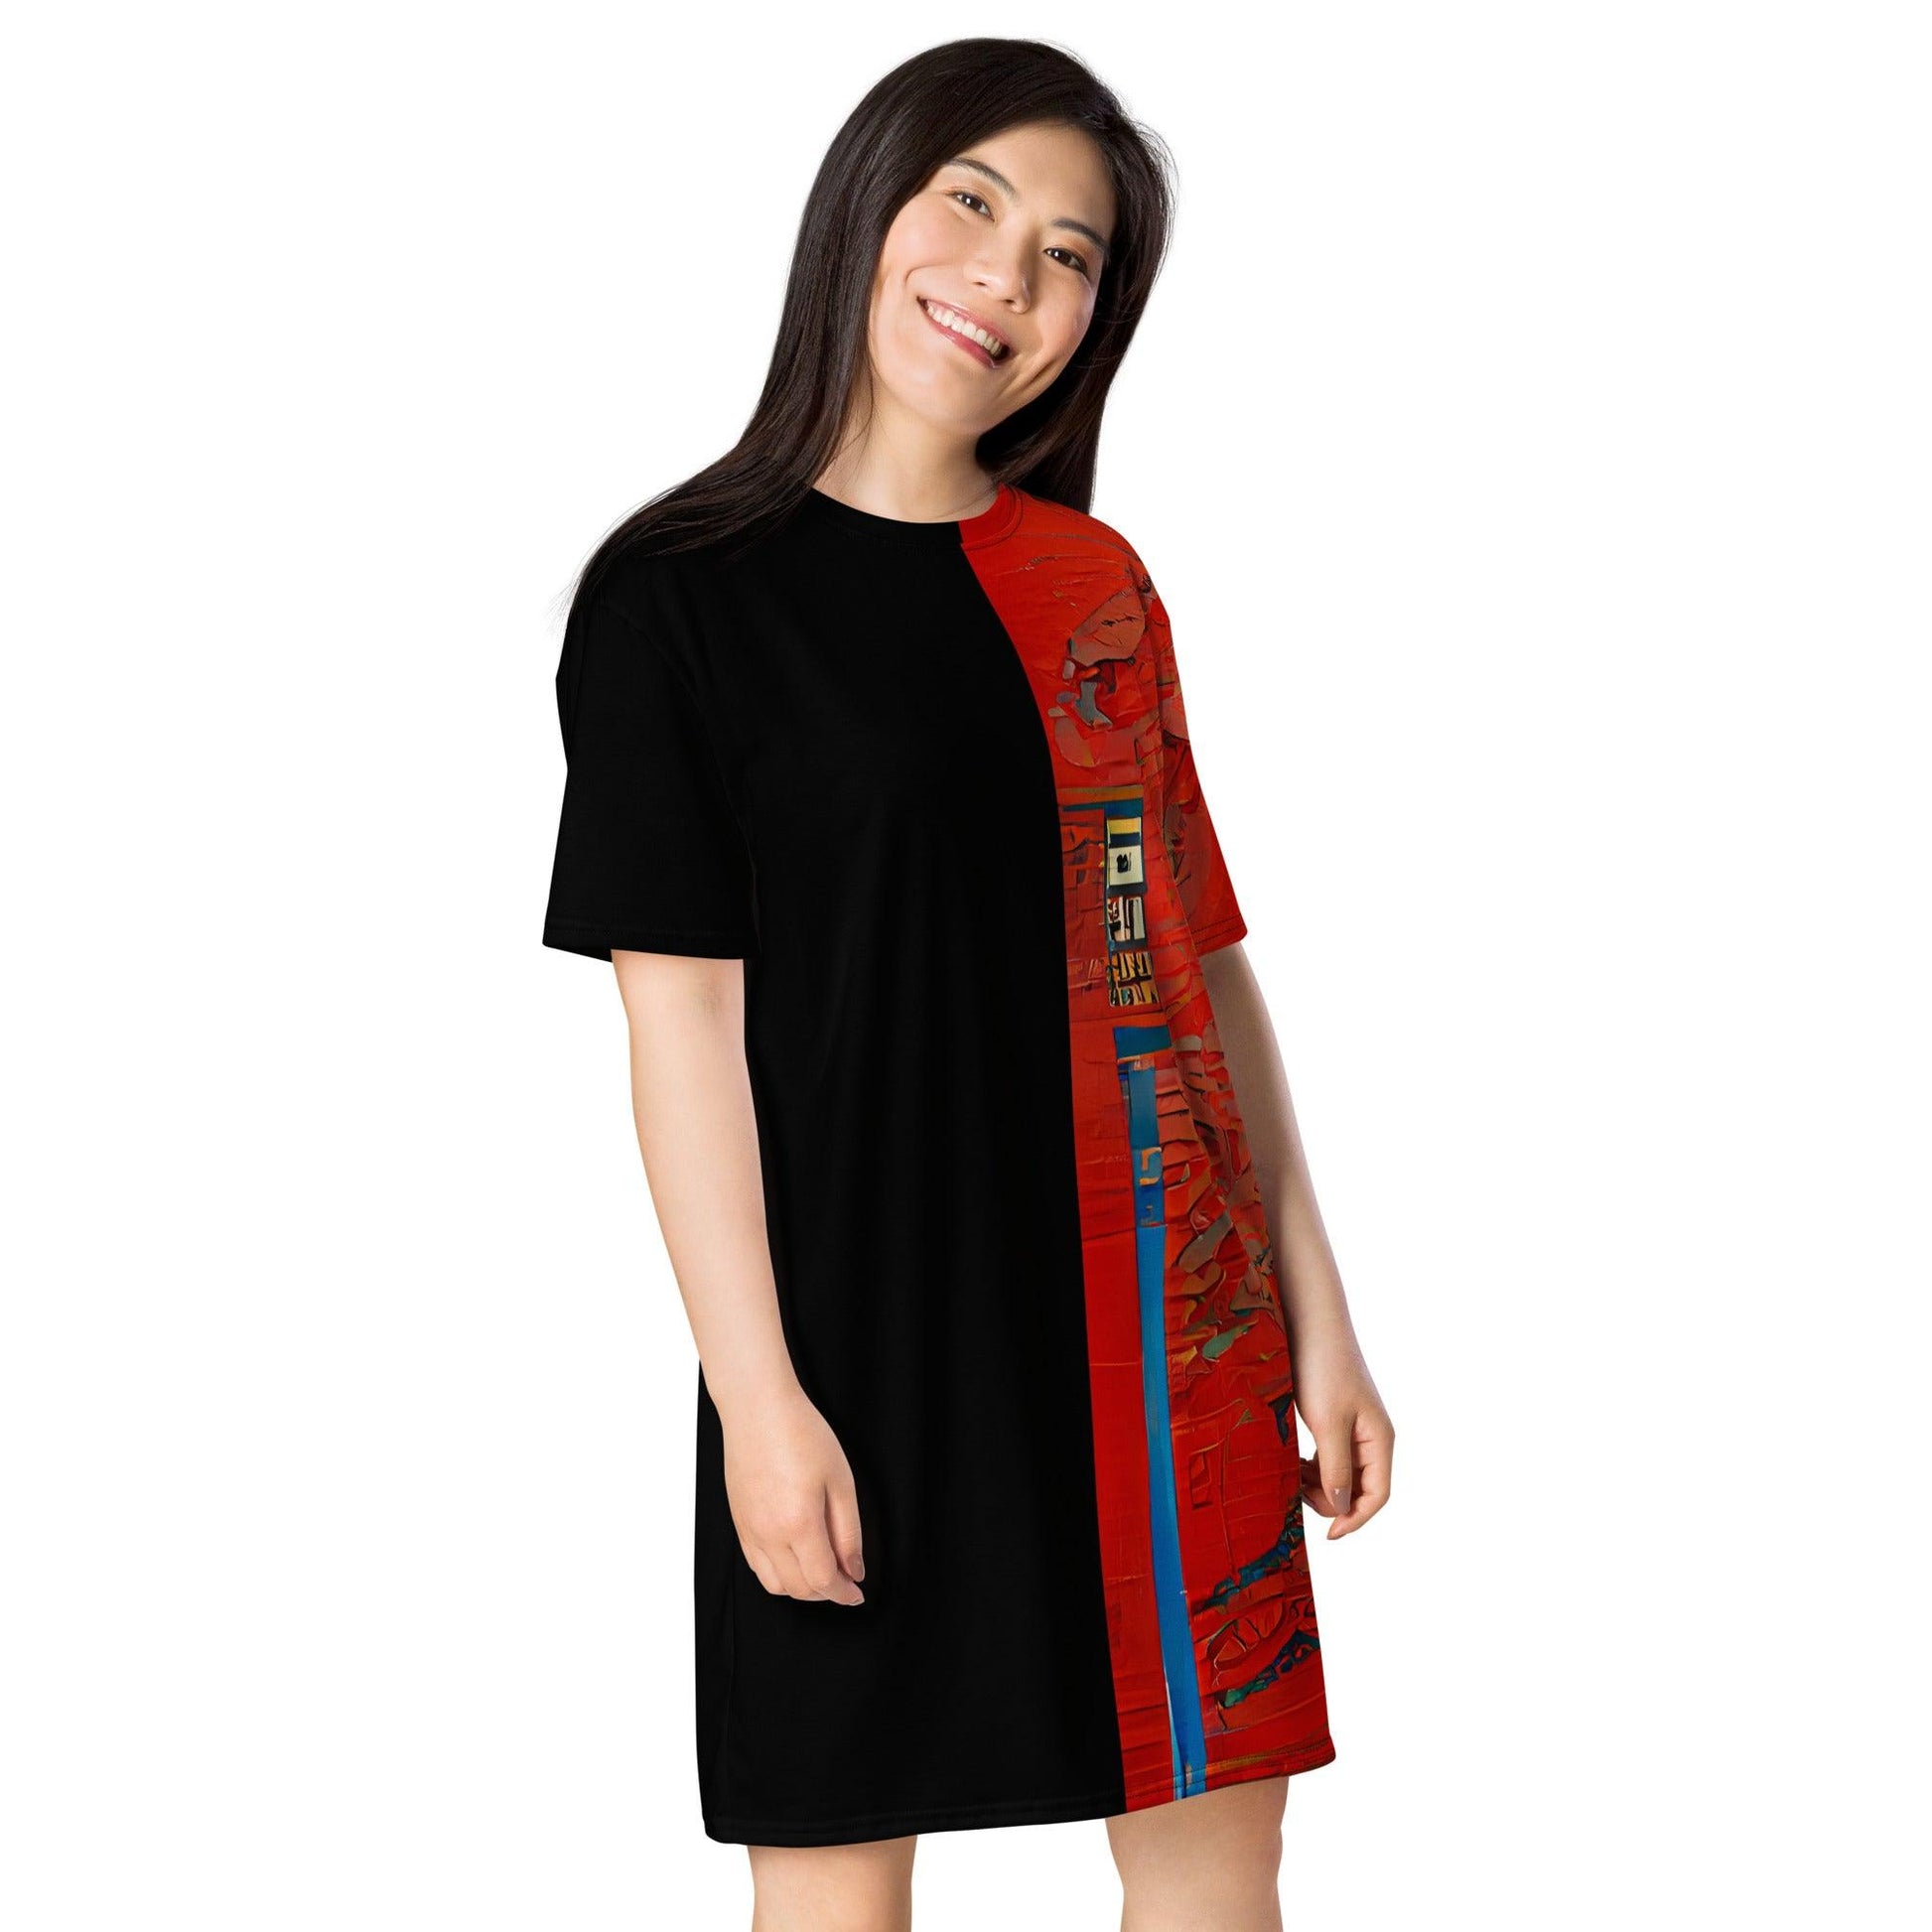 Half Black Half Honghai - Womens T-Shirt Dress - iSAW Company